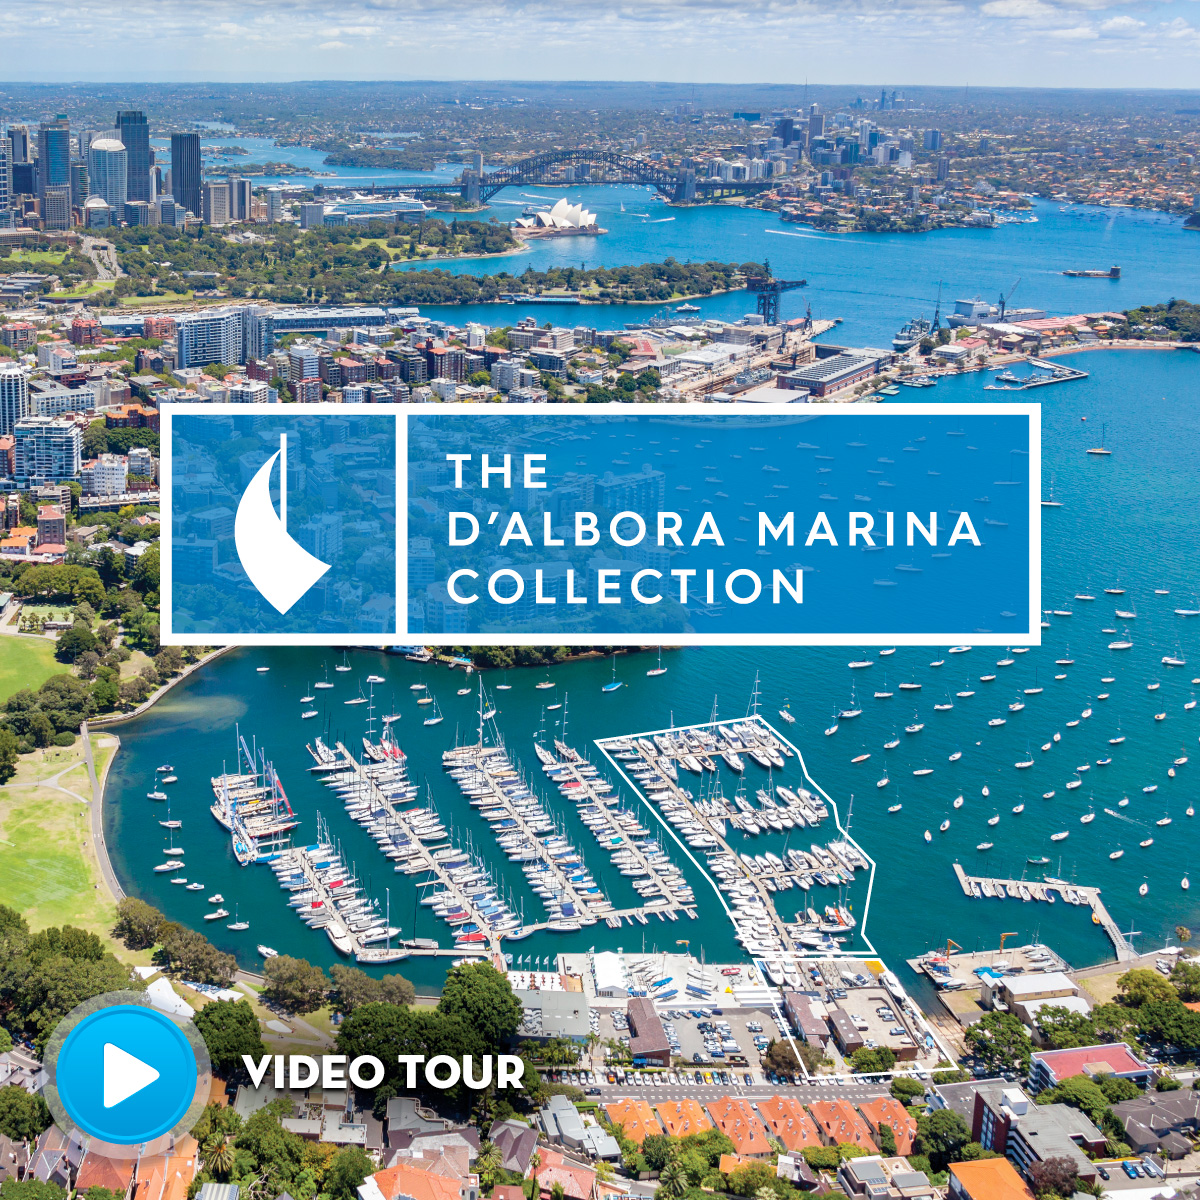 The d'Albora Marina Collection